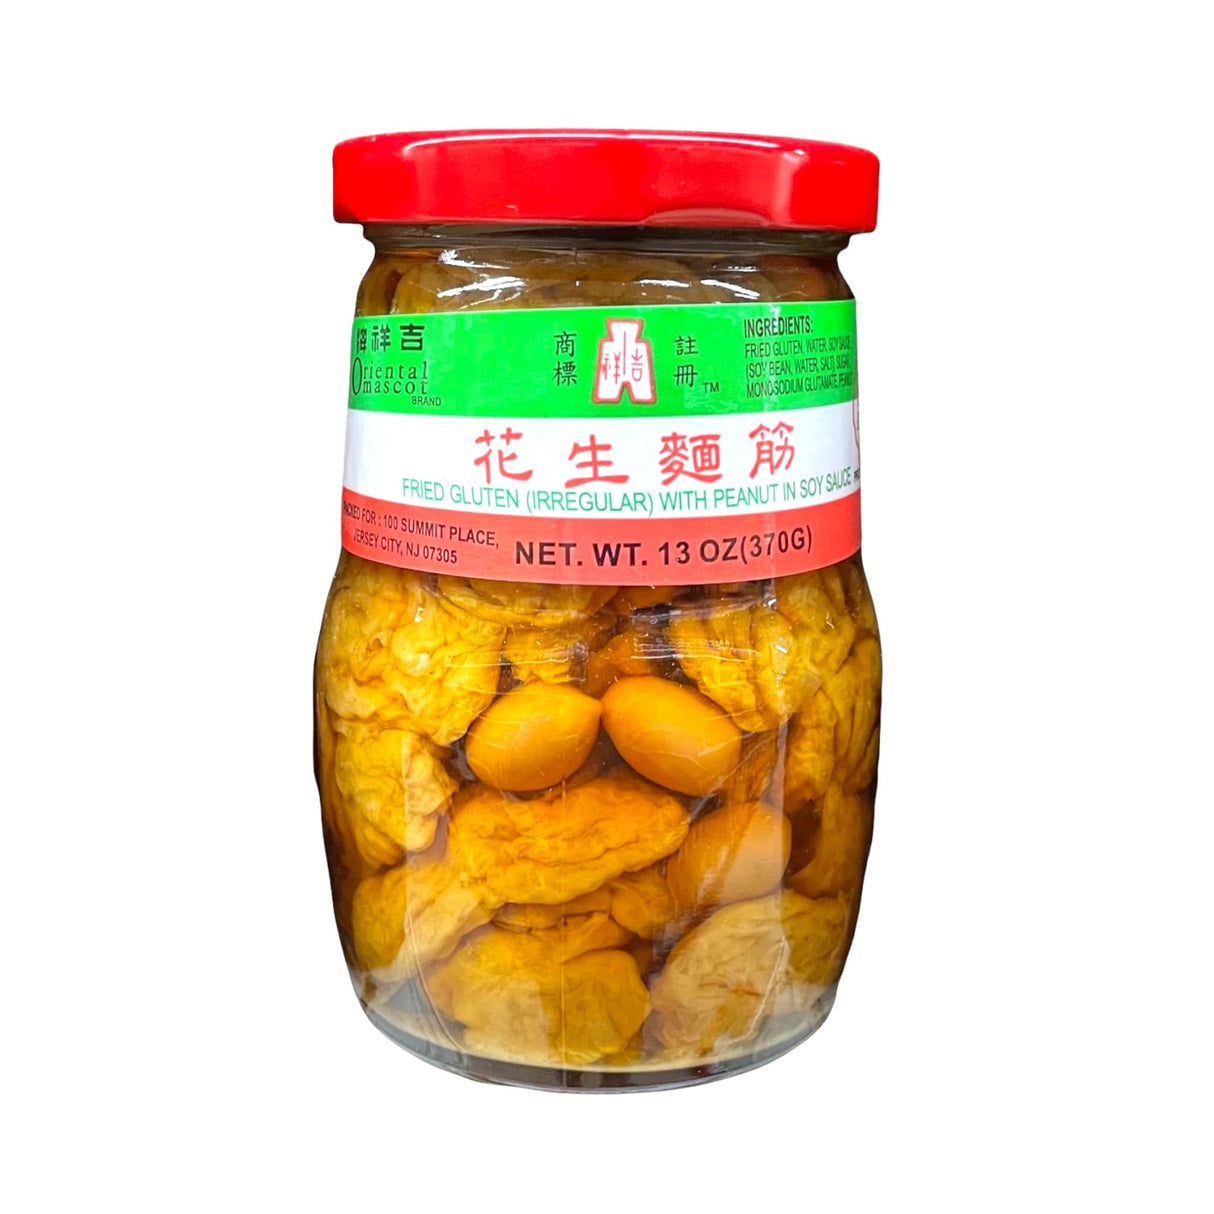 Oriental Mascot Fried Gluten (irregular) with peanut in Soy Sauce